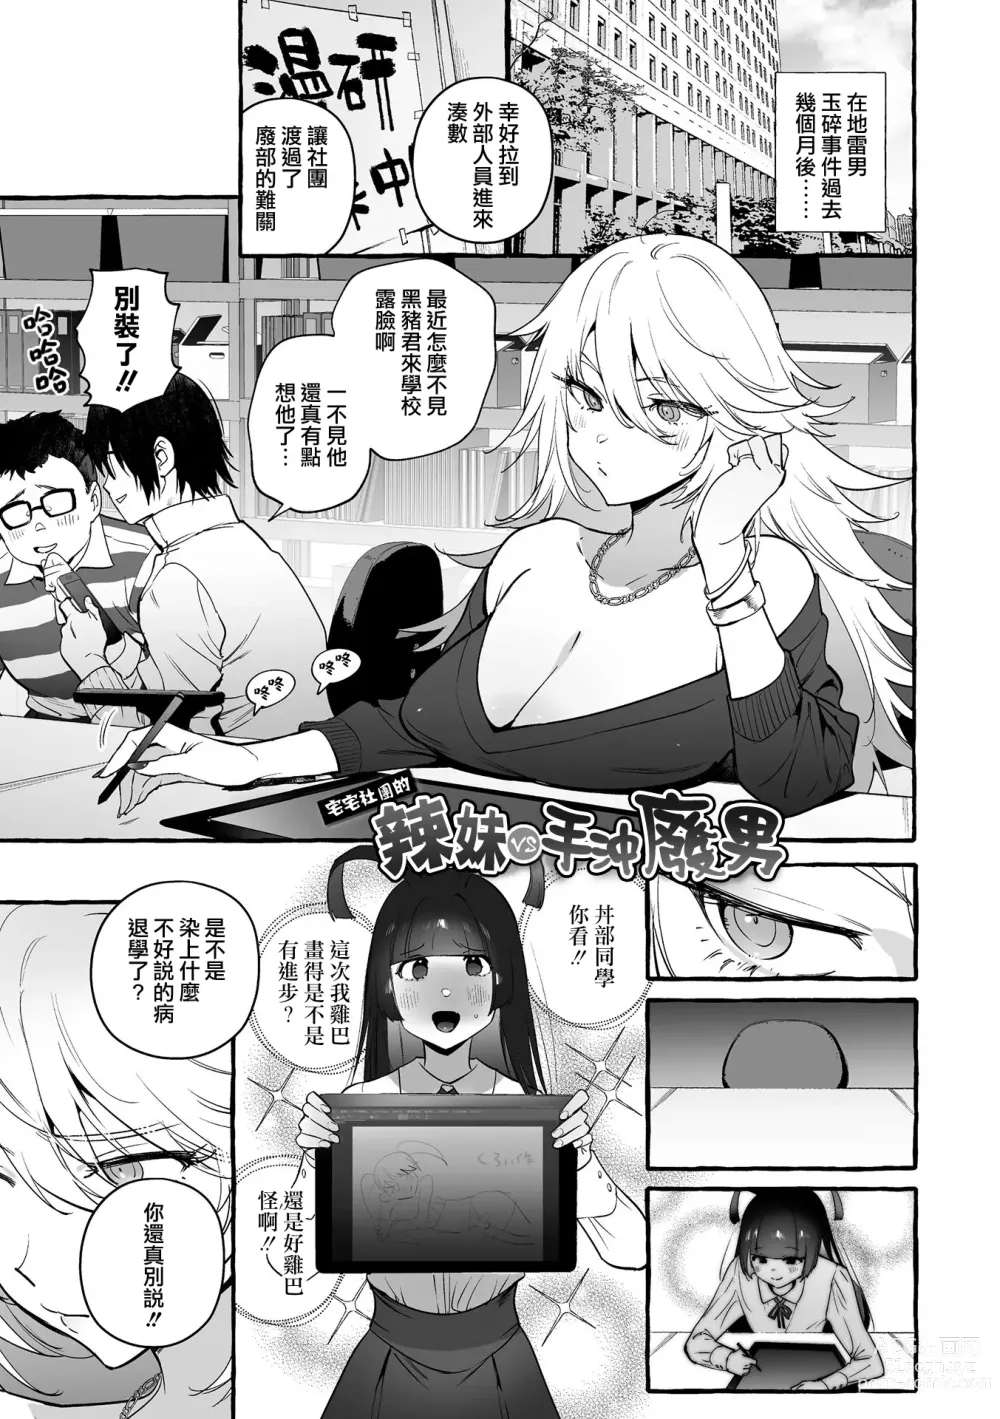 Page 2 of manga 宅男社团的辣妹VS手冲废男